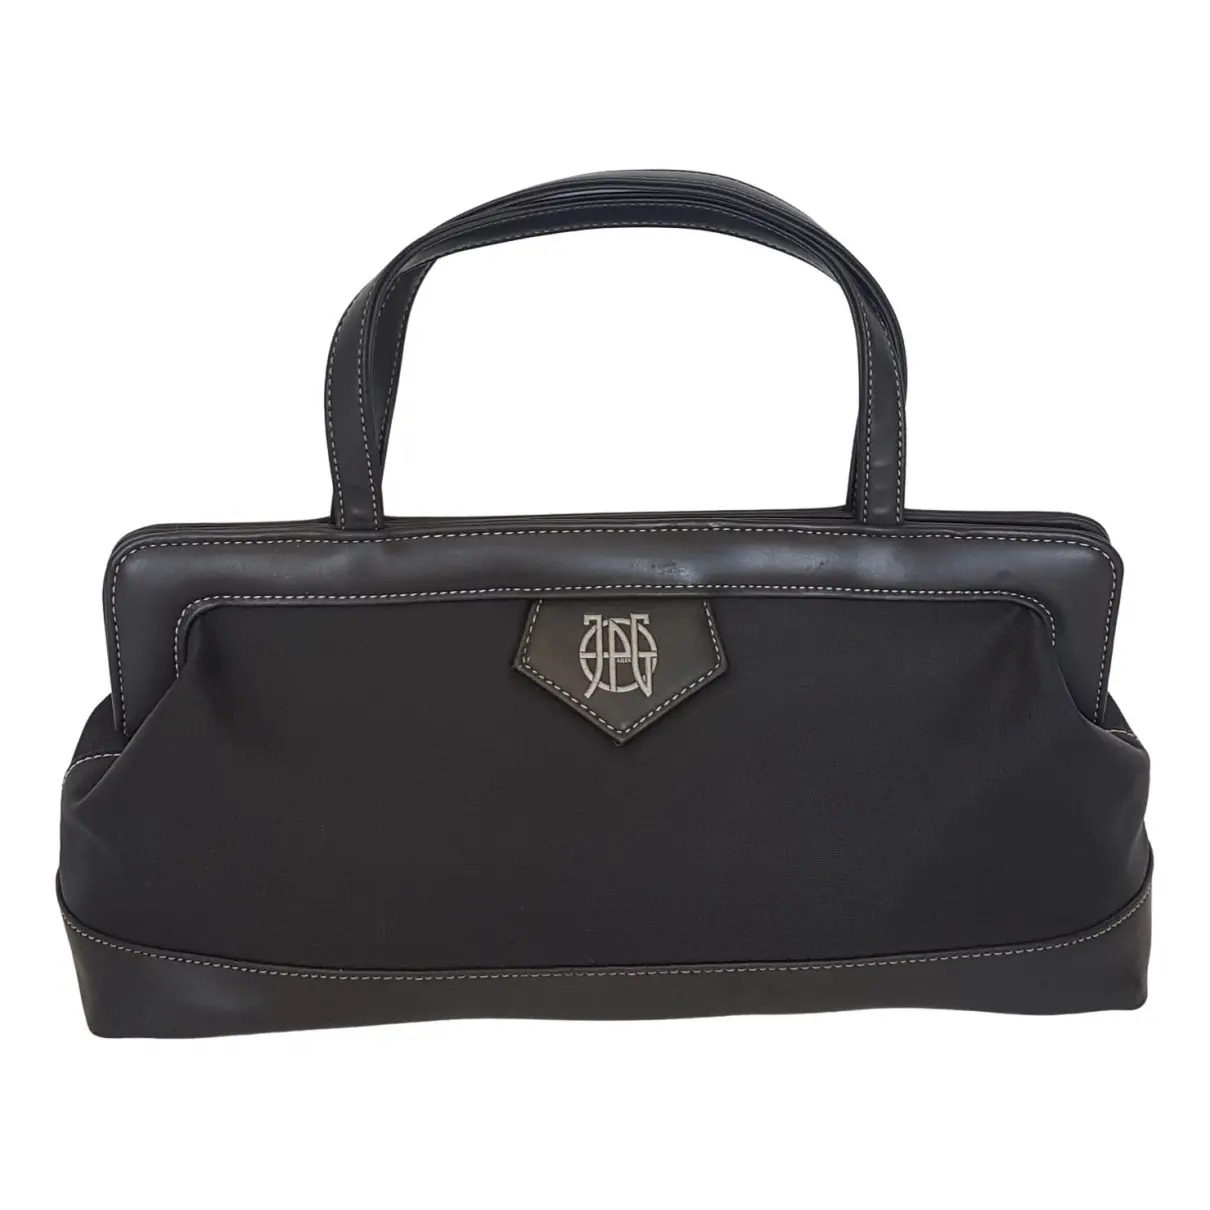 Leather handbag Jean Paul Gaultier - Vintage